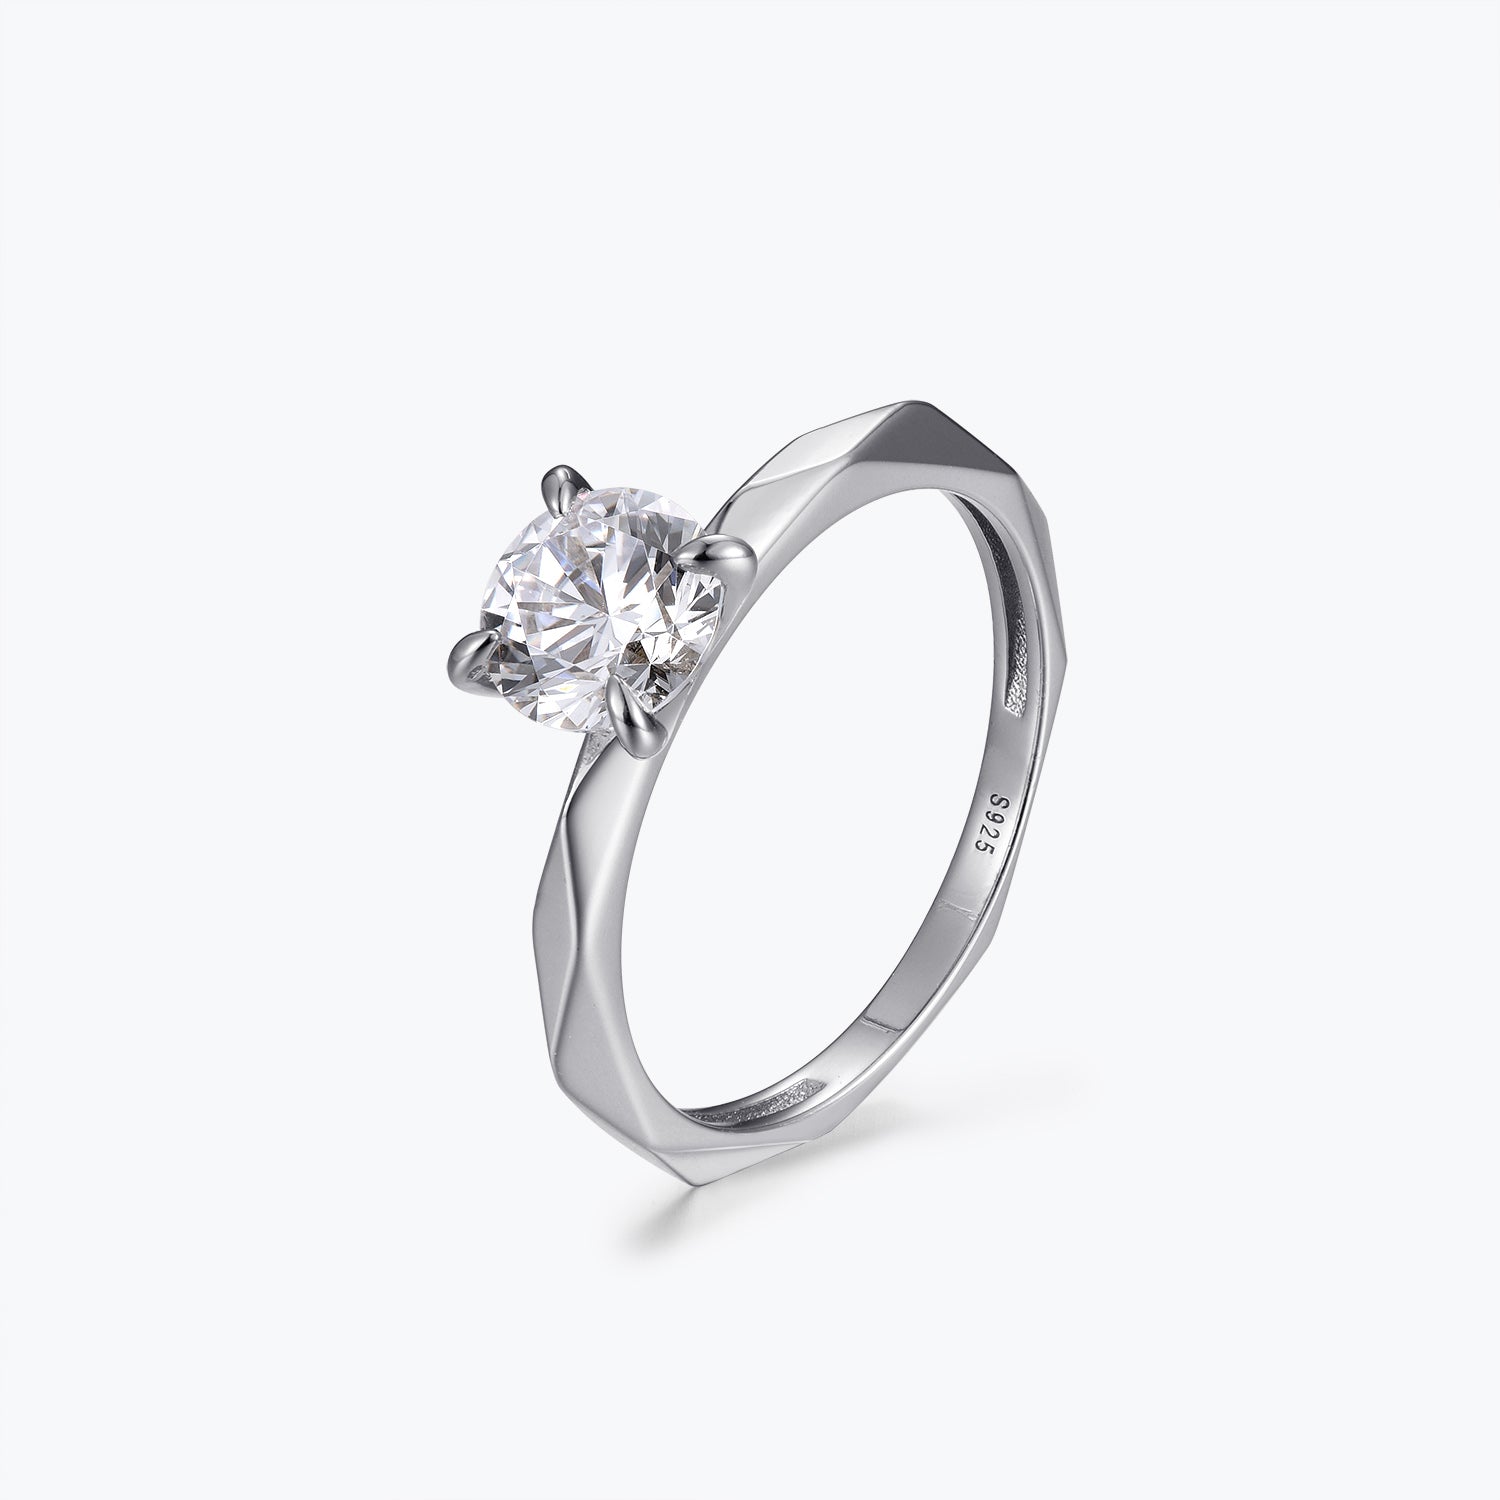 Dissoo® 1.0 Carat Round Cut Moissanite Engagement Wedding Ring in Gold Vermeil